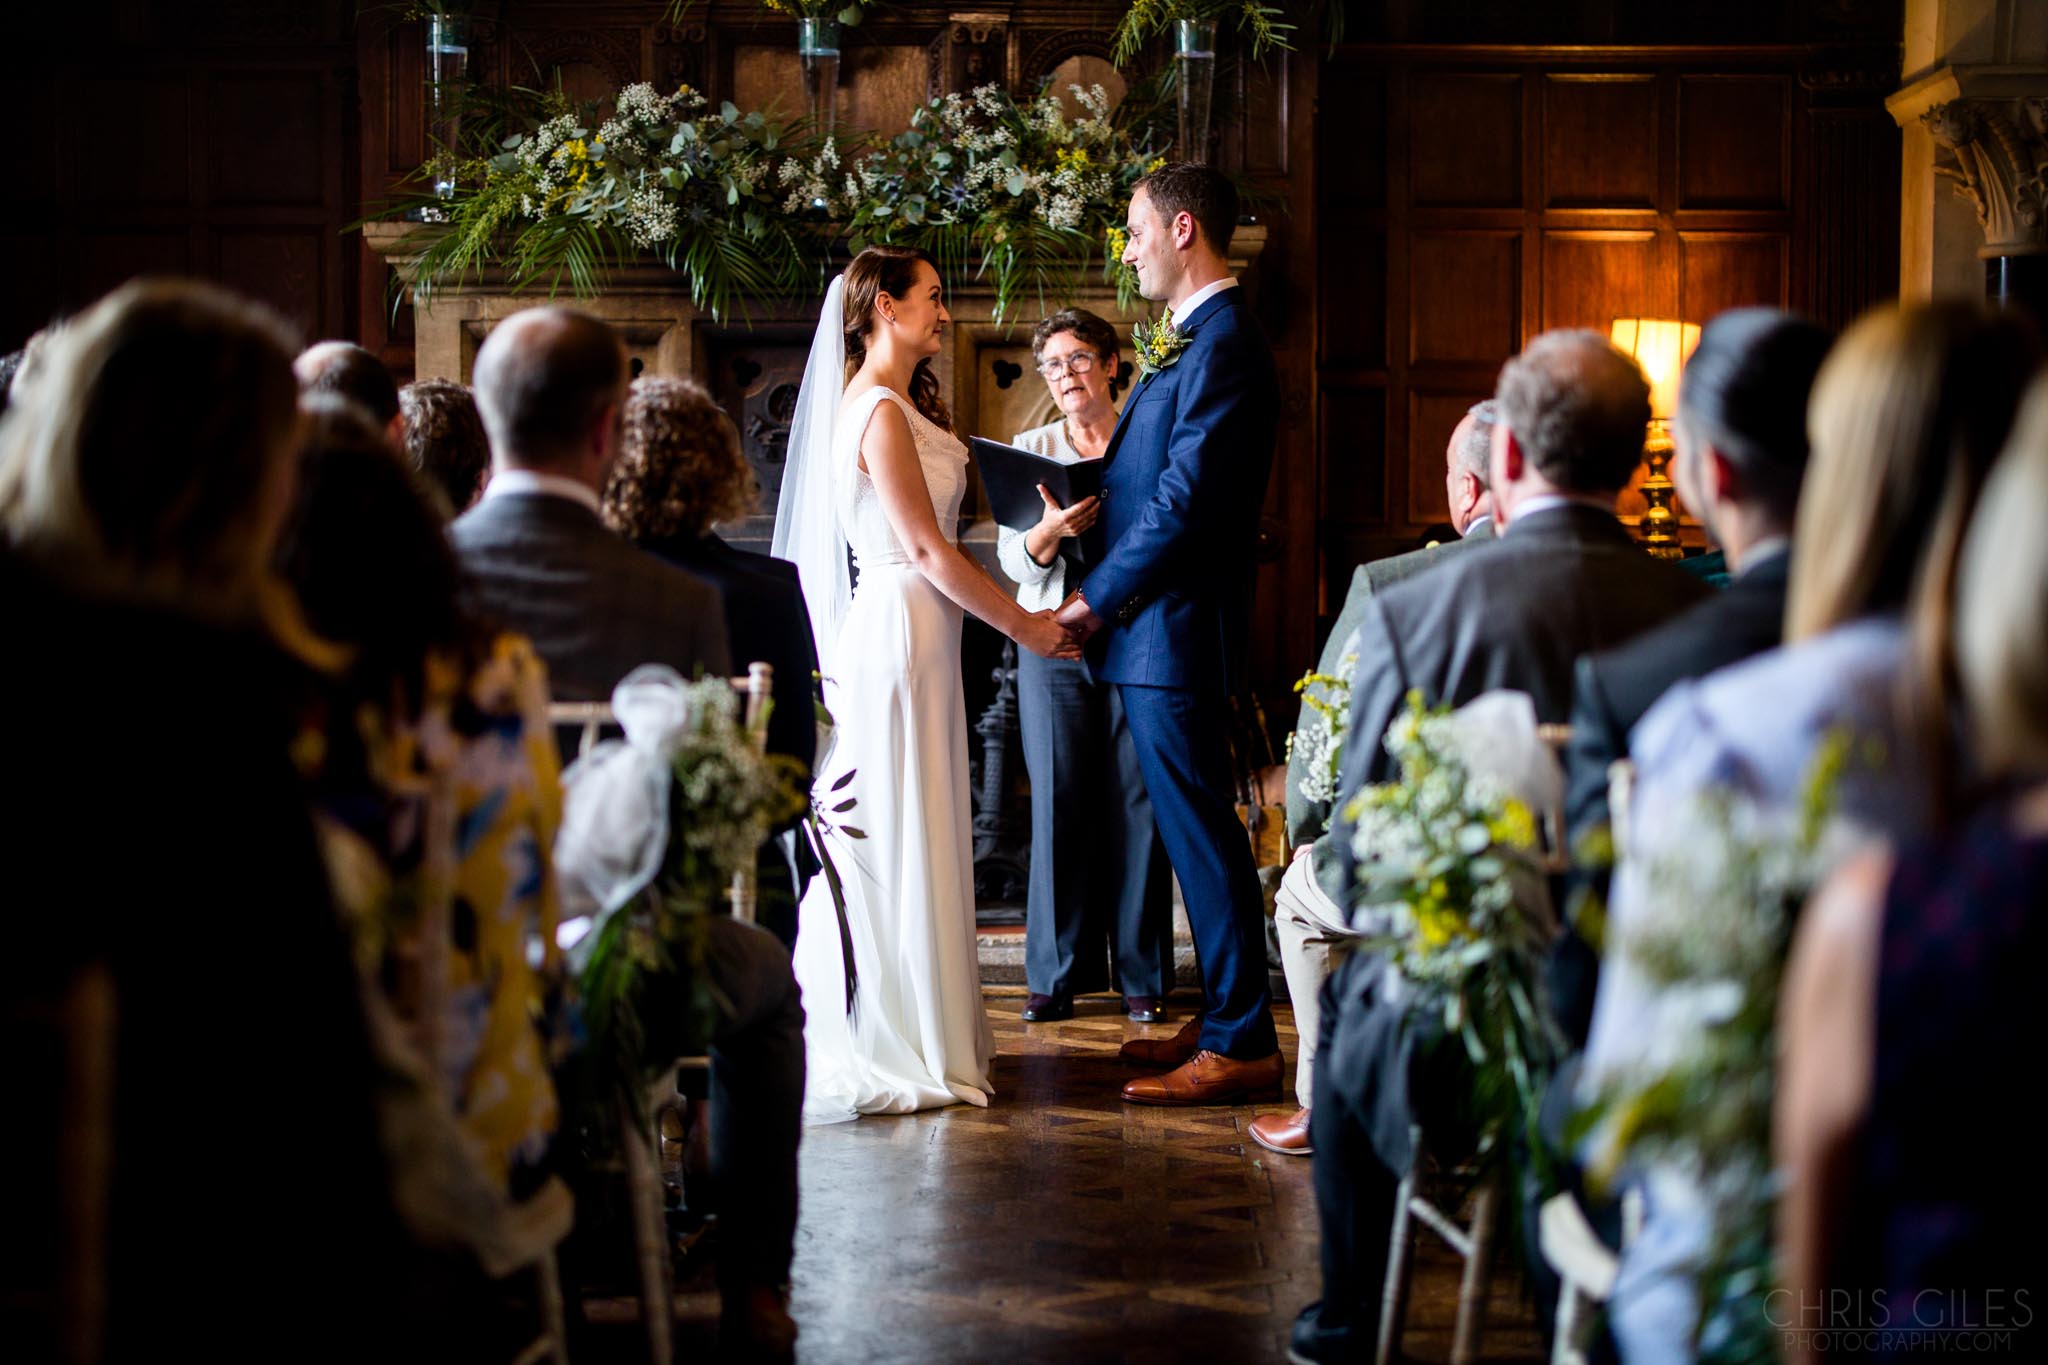 Wedding Photography of a ceremony at Huntsham Court